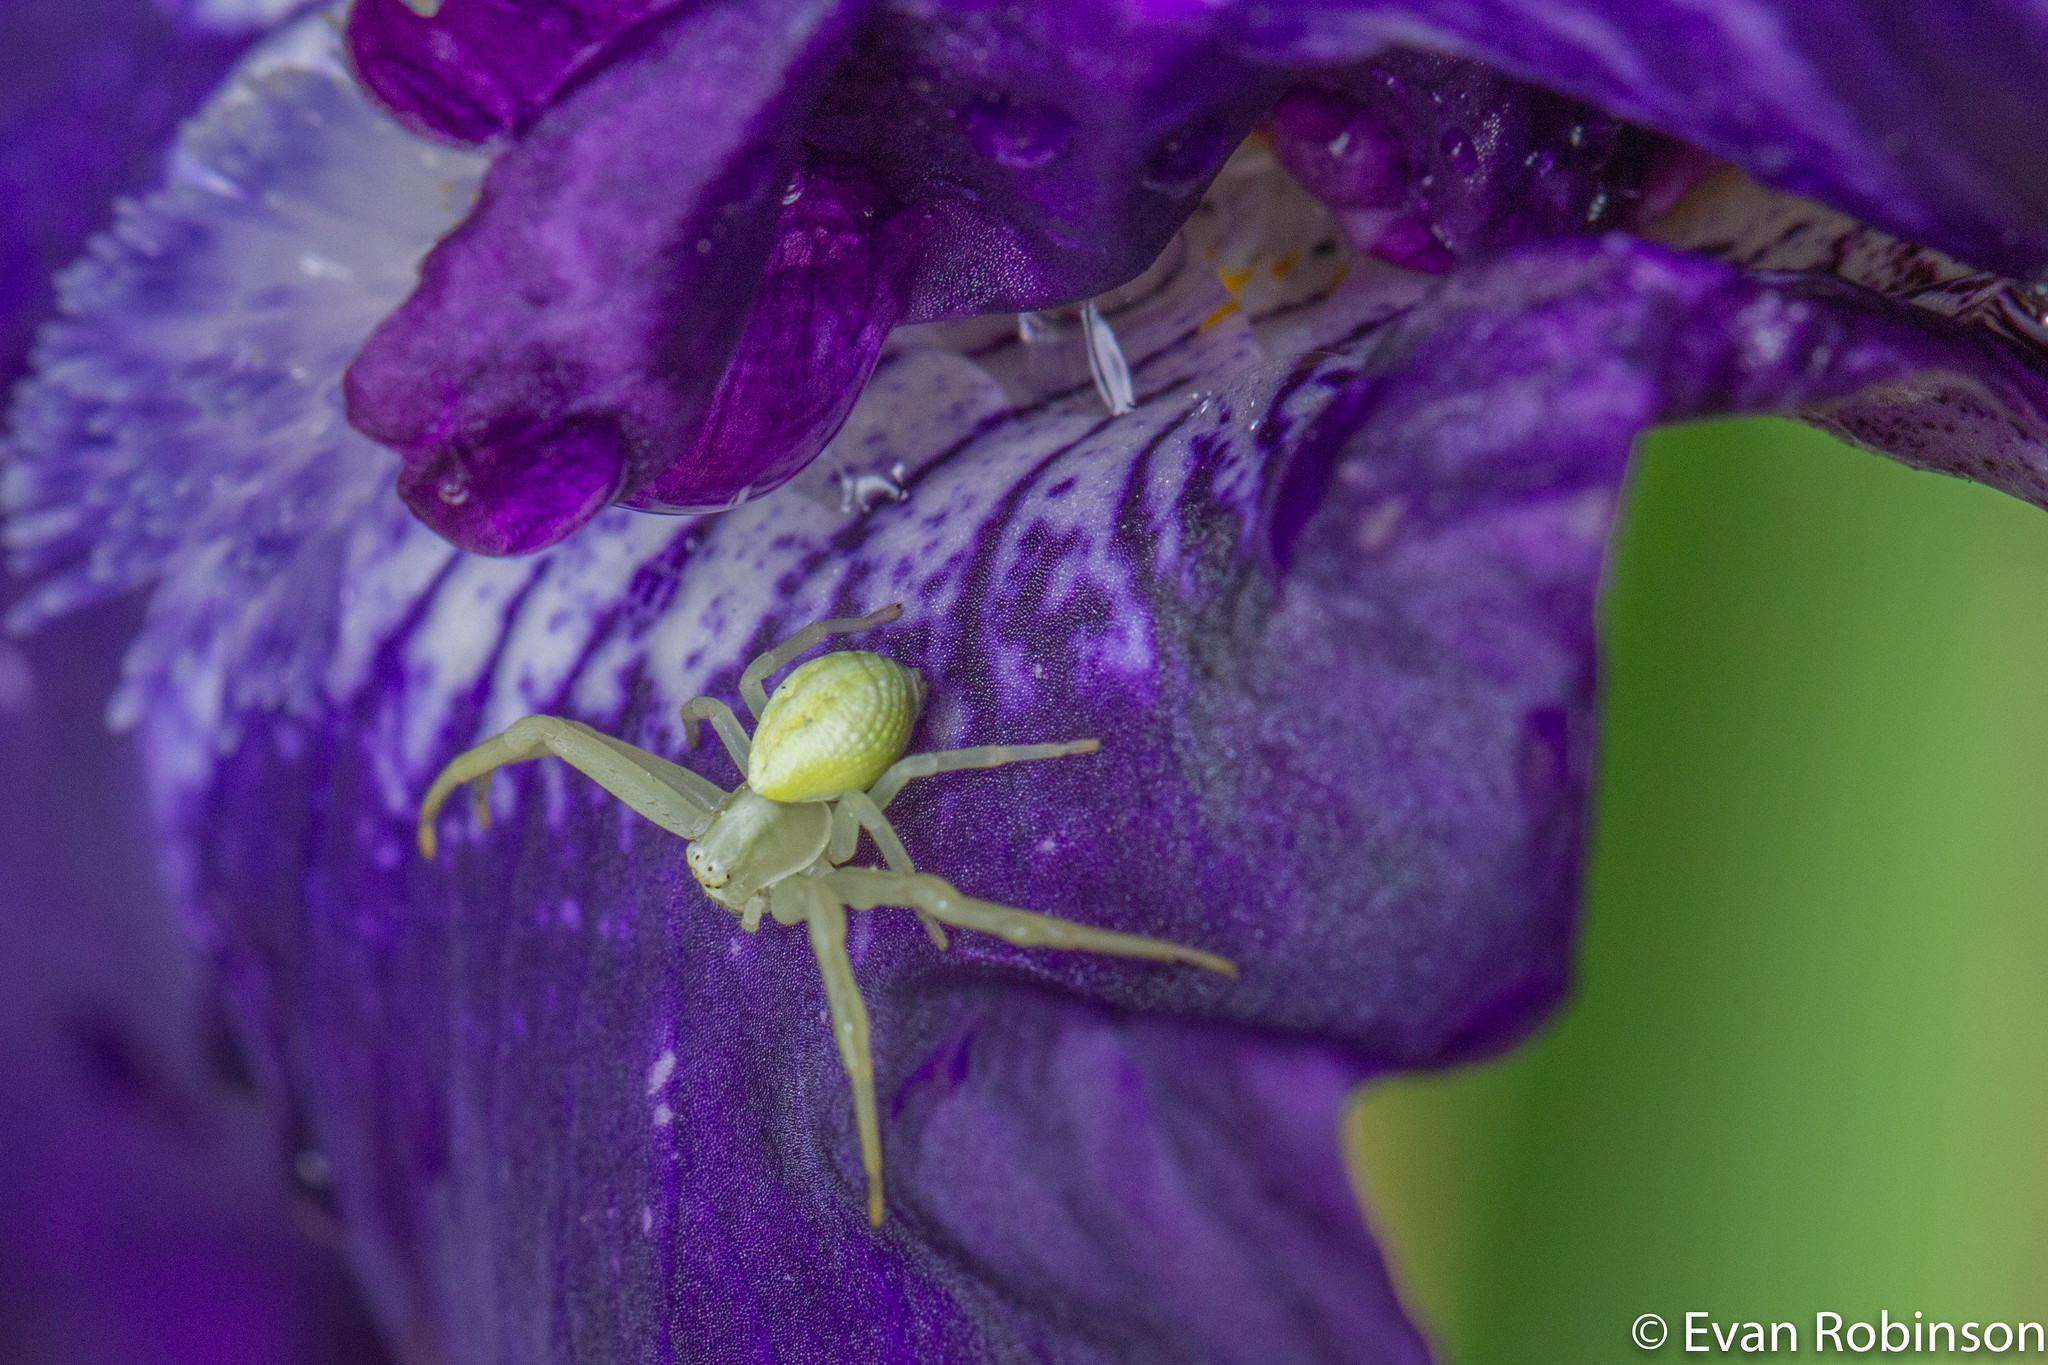 Small green spider on Iris blossom